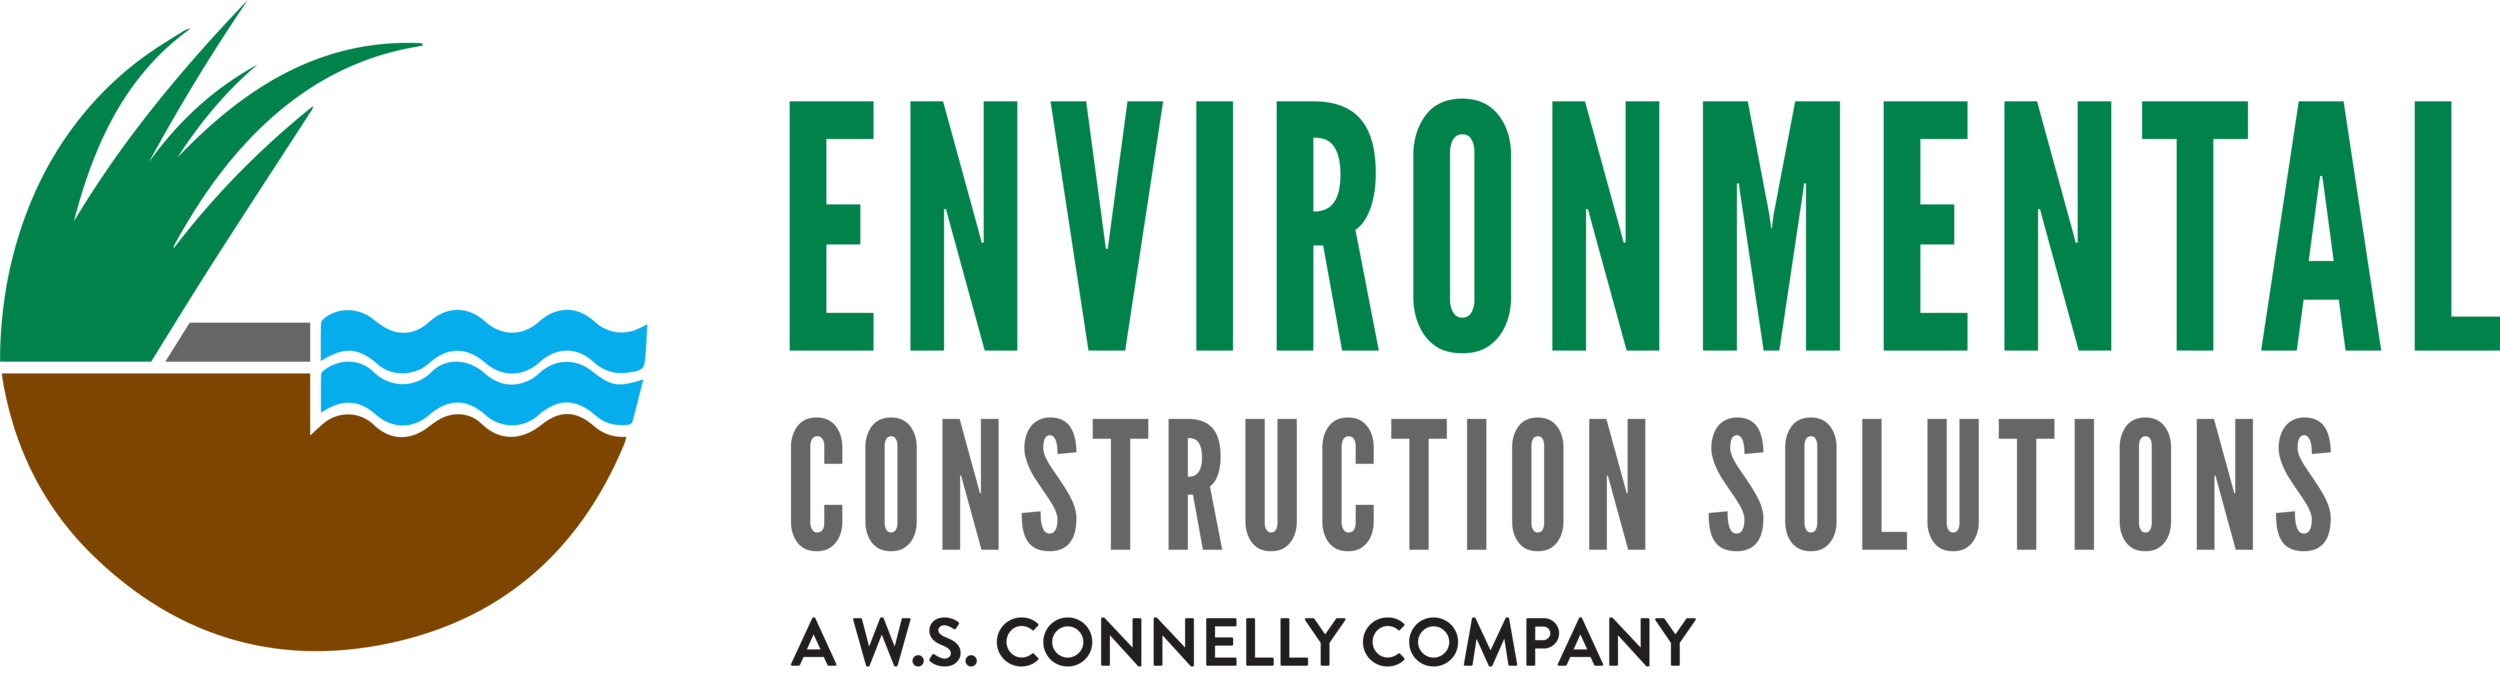 Environmental Construction Solutions